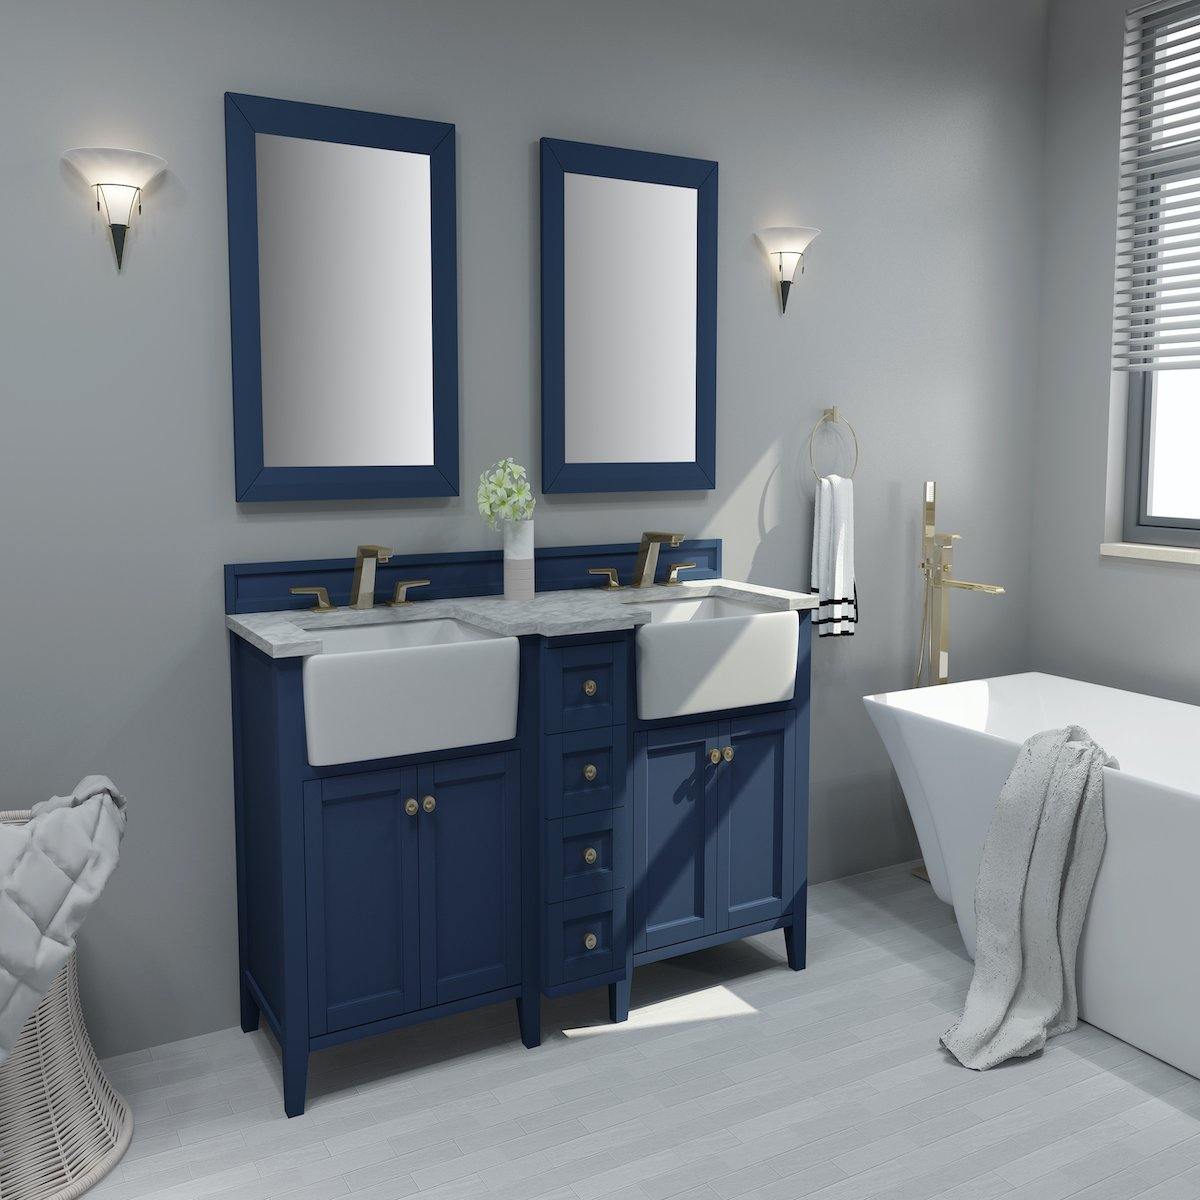 Ancerre Designs Adeline 60 Inch Heritage Blue Double Vanity in Bathroom #finish_heritage blue